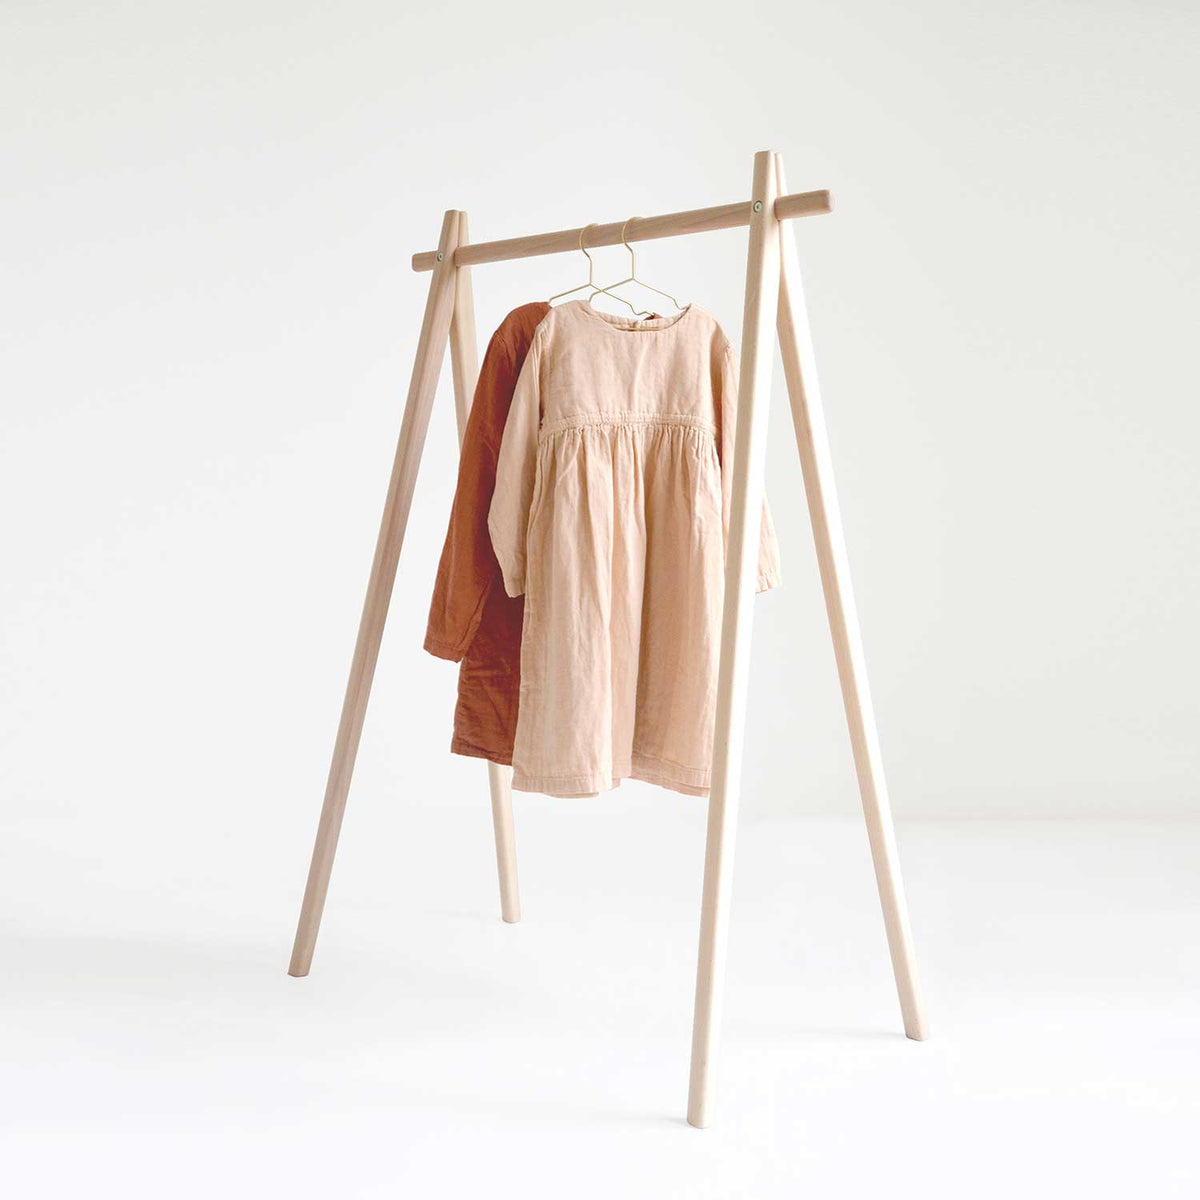 Charlie Crane Children's clothes hanger HOMI – Elenfhant